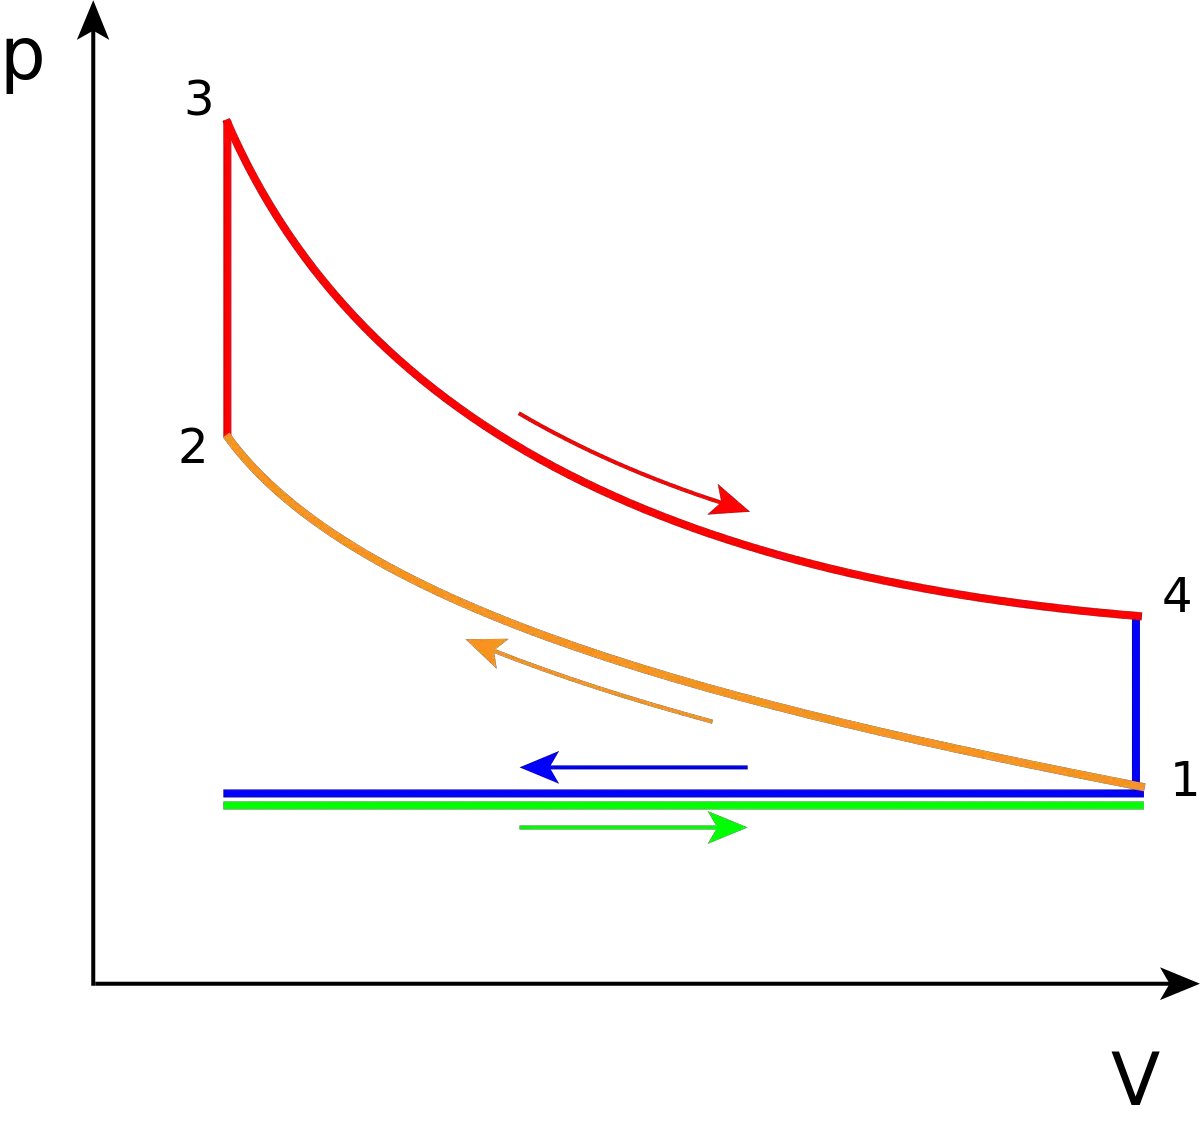 Theoretical Otto cycle. Pressure-volume diagram PV